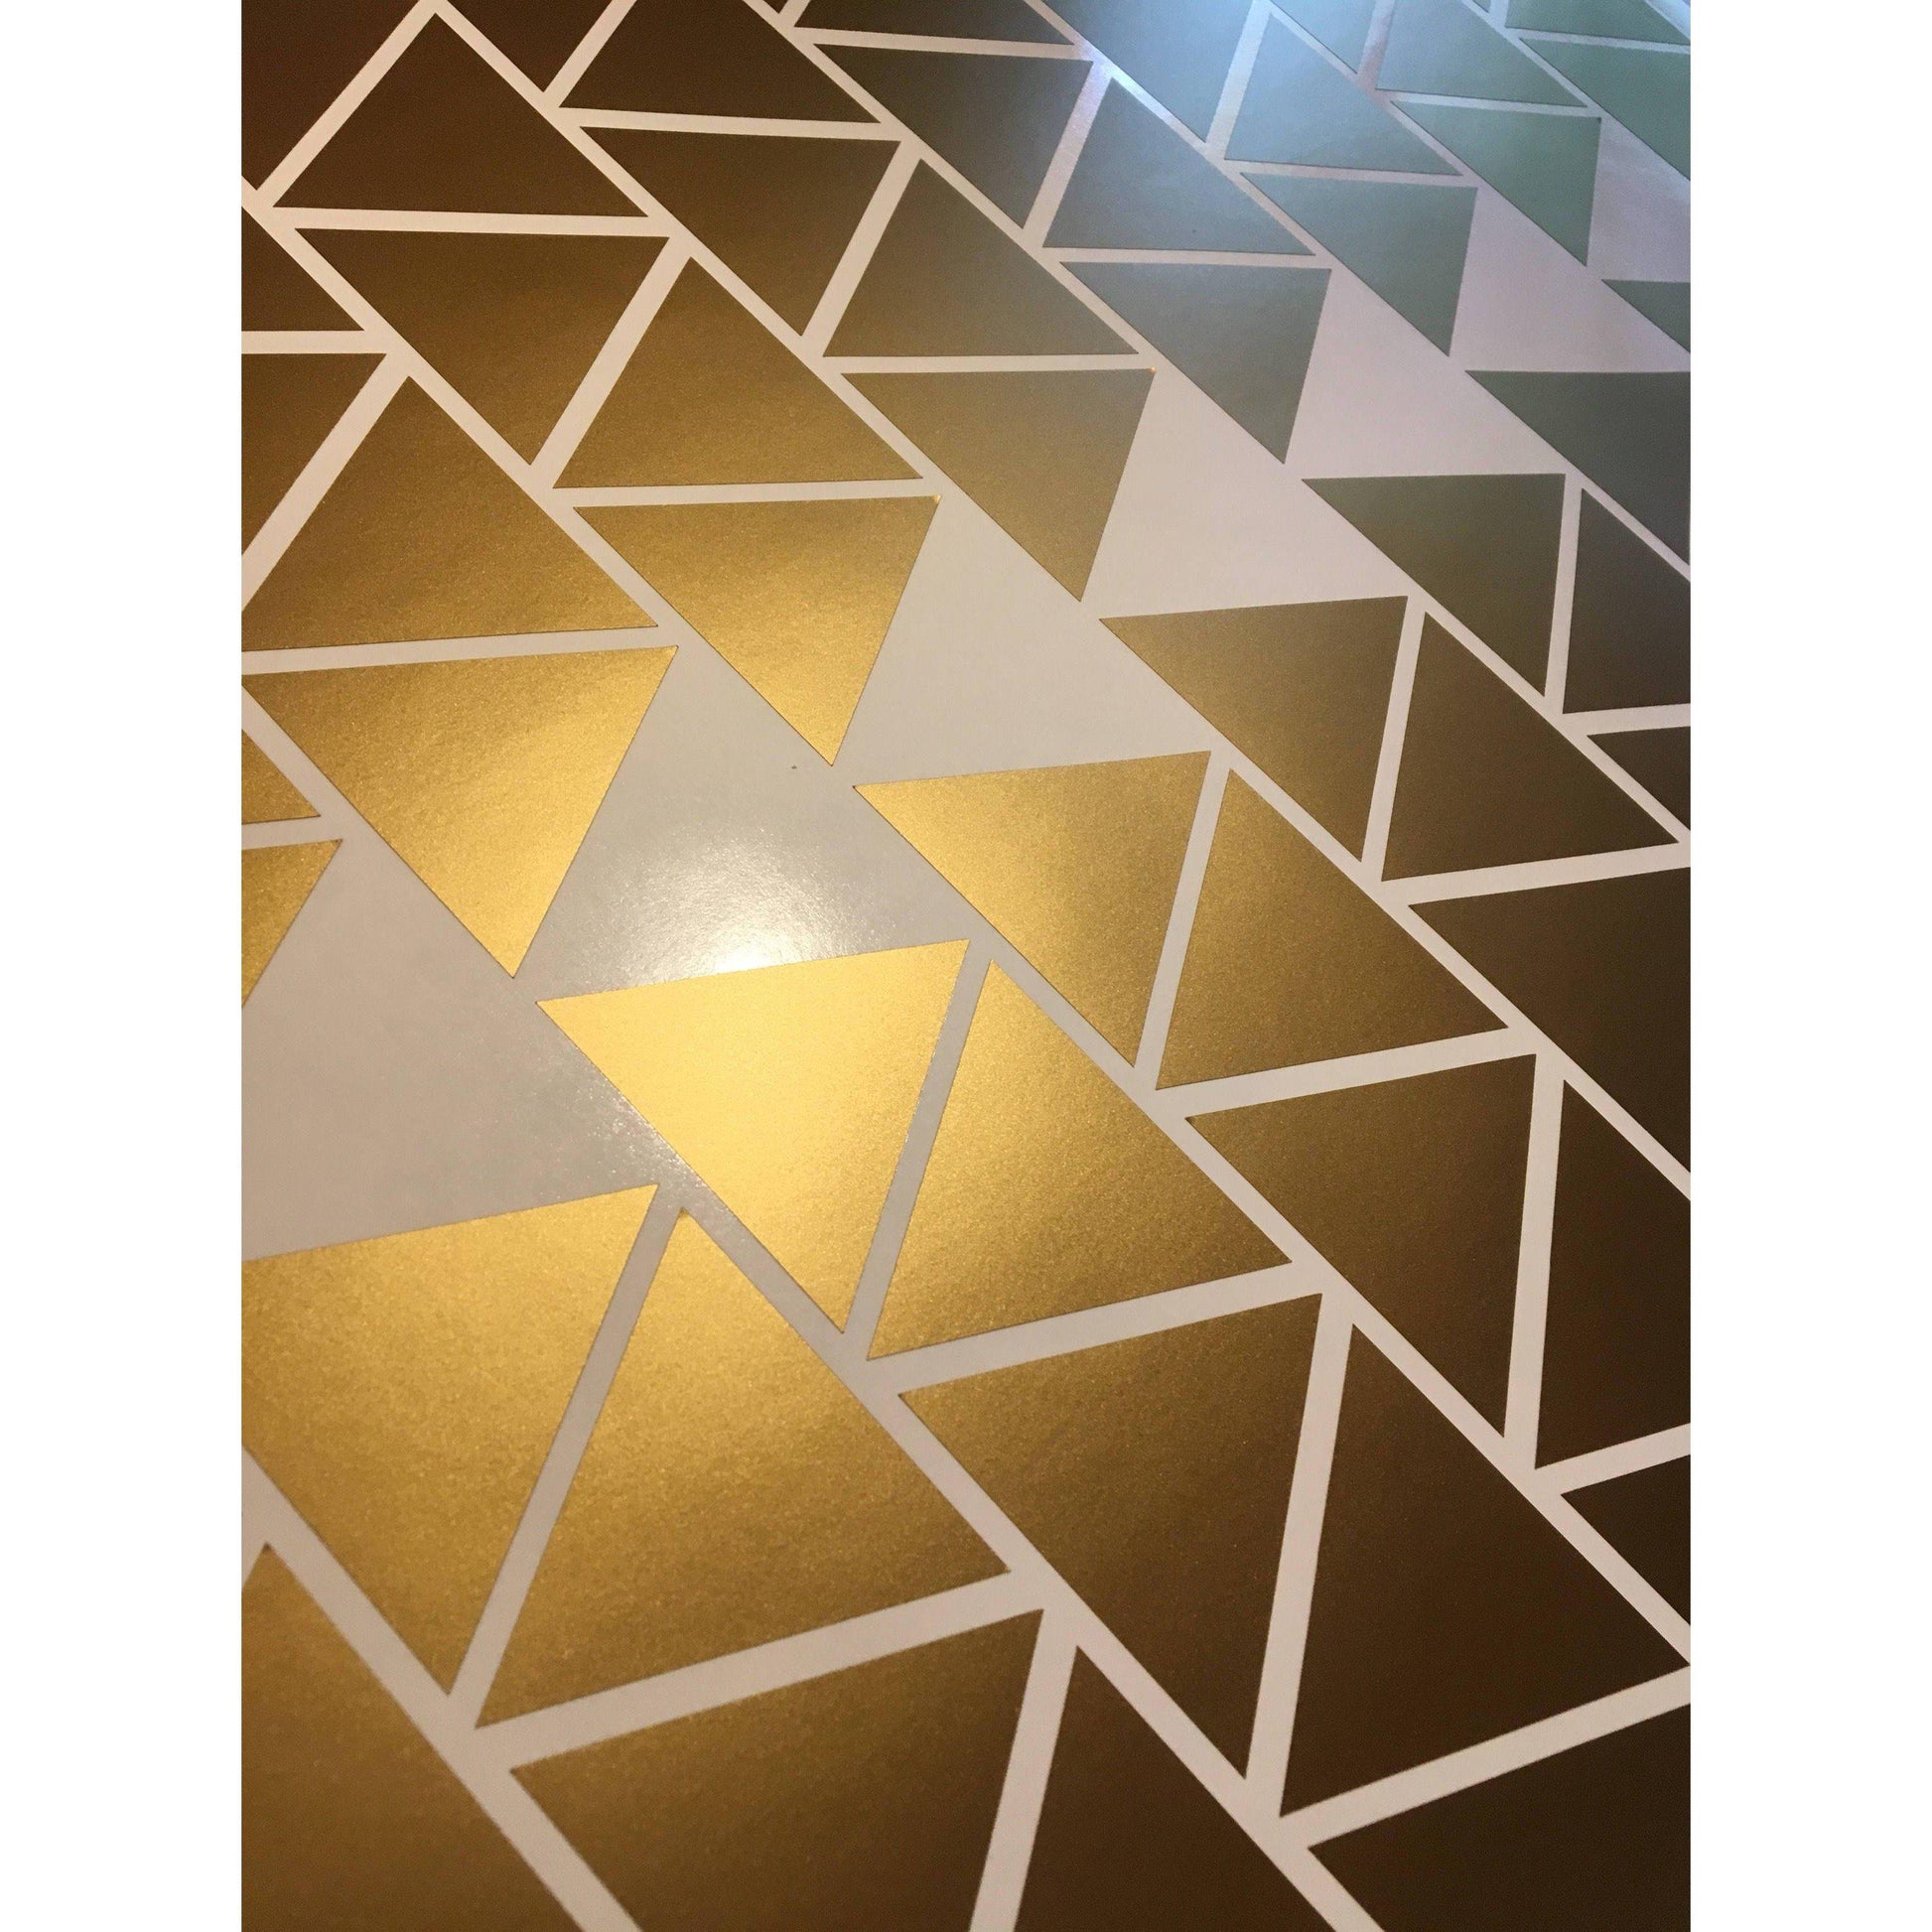 100 Gold Metallic Triangle Wall Stickers, Gold triangle Decals, Triangle Wall Stickers, Triangles, Decoration Confetti, Nursery Wall Decals